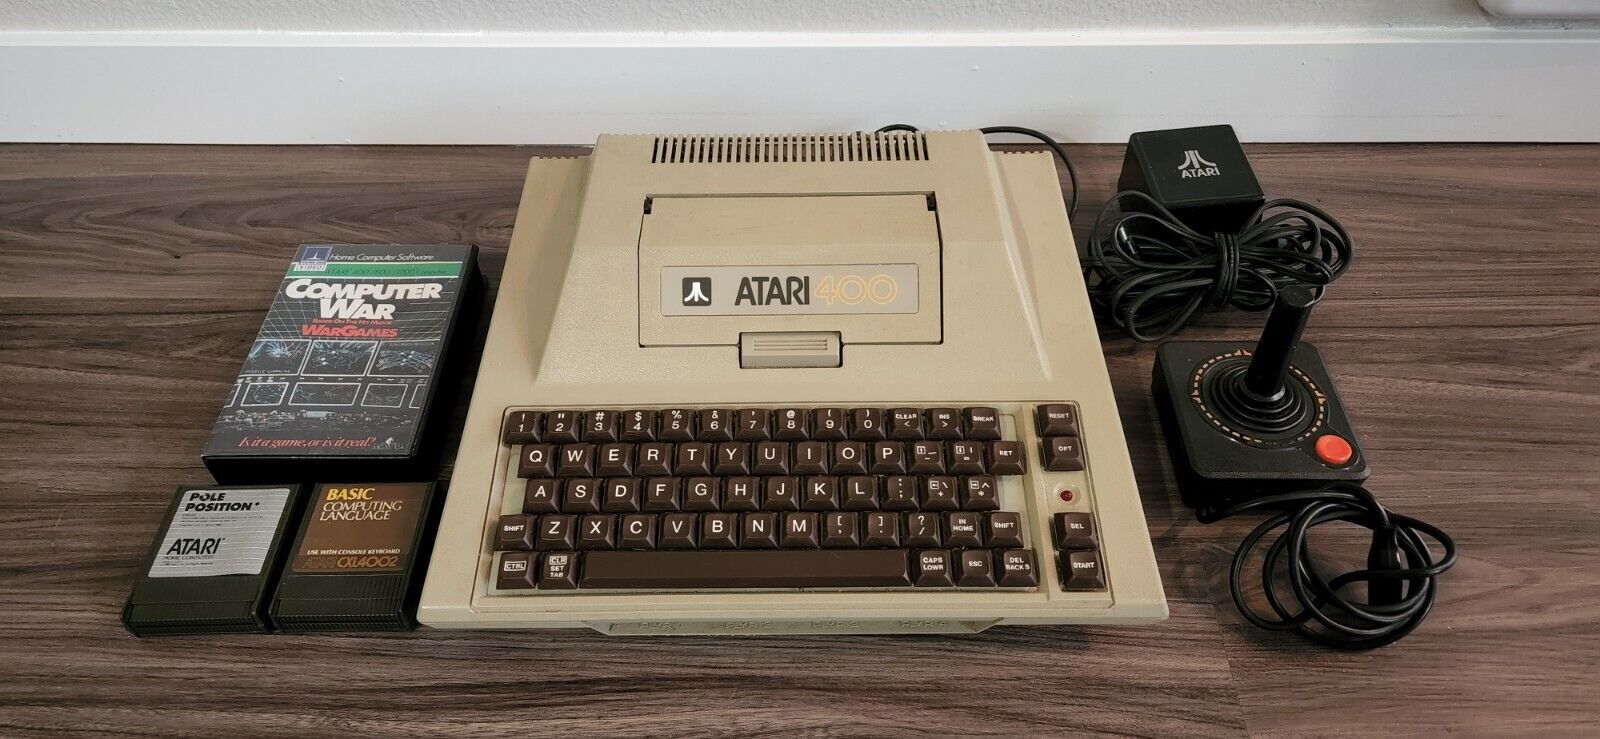 Atari 400 with Accessories